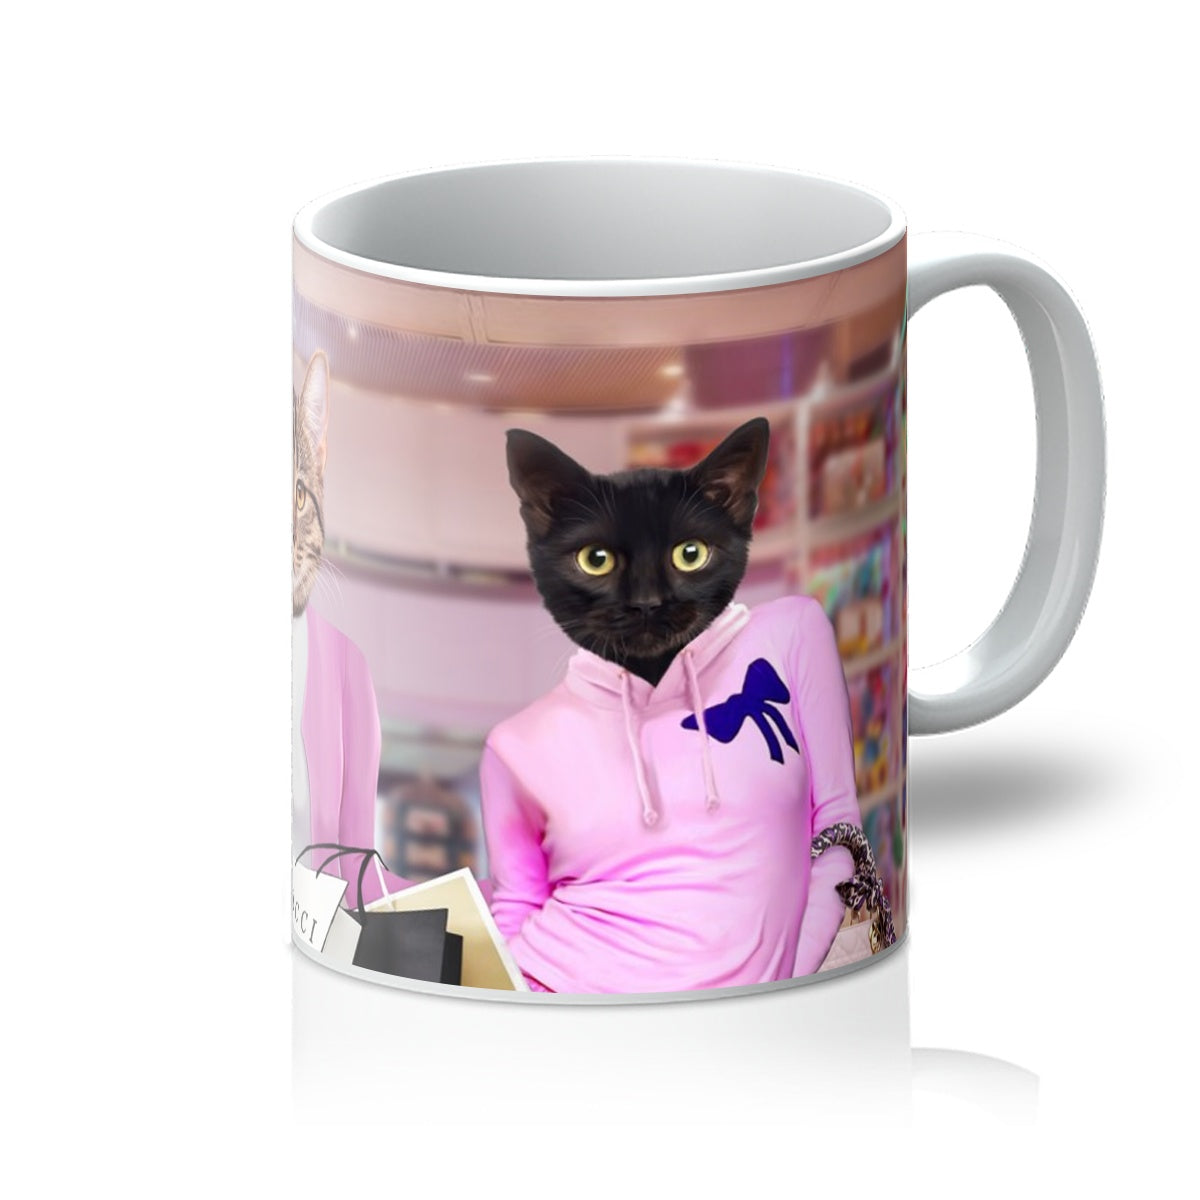 The Meanies (Means Girls Inspired): Custom Pet Coffee Mug